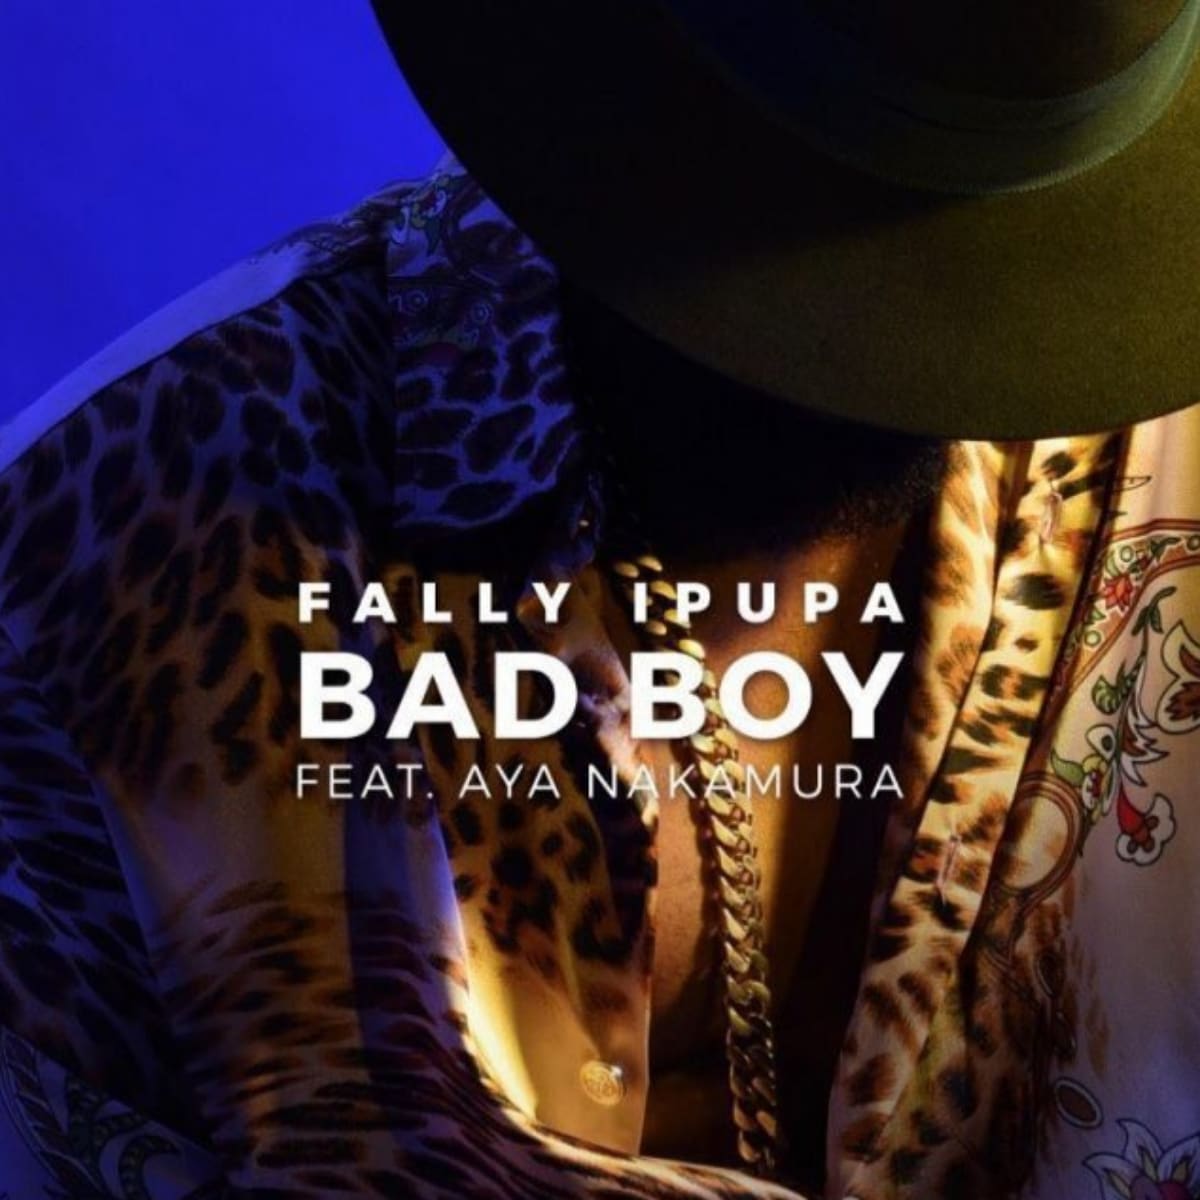 DOWNLOAD: Fally Ipupa Ft. Aya Nakamura – “Bad Boy” Video + Audio Mp3